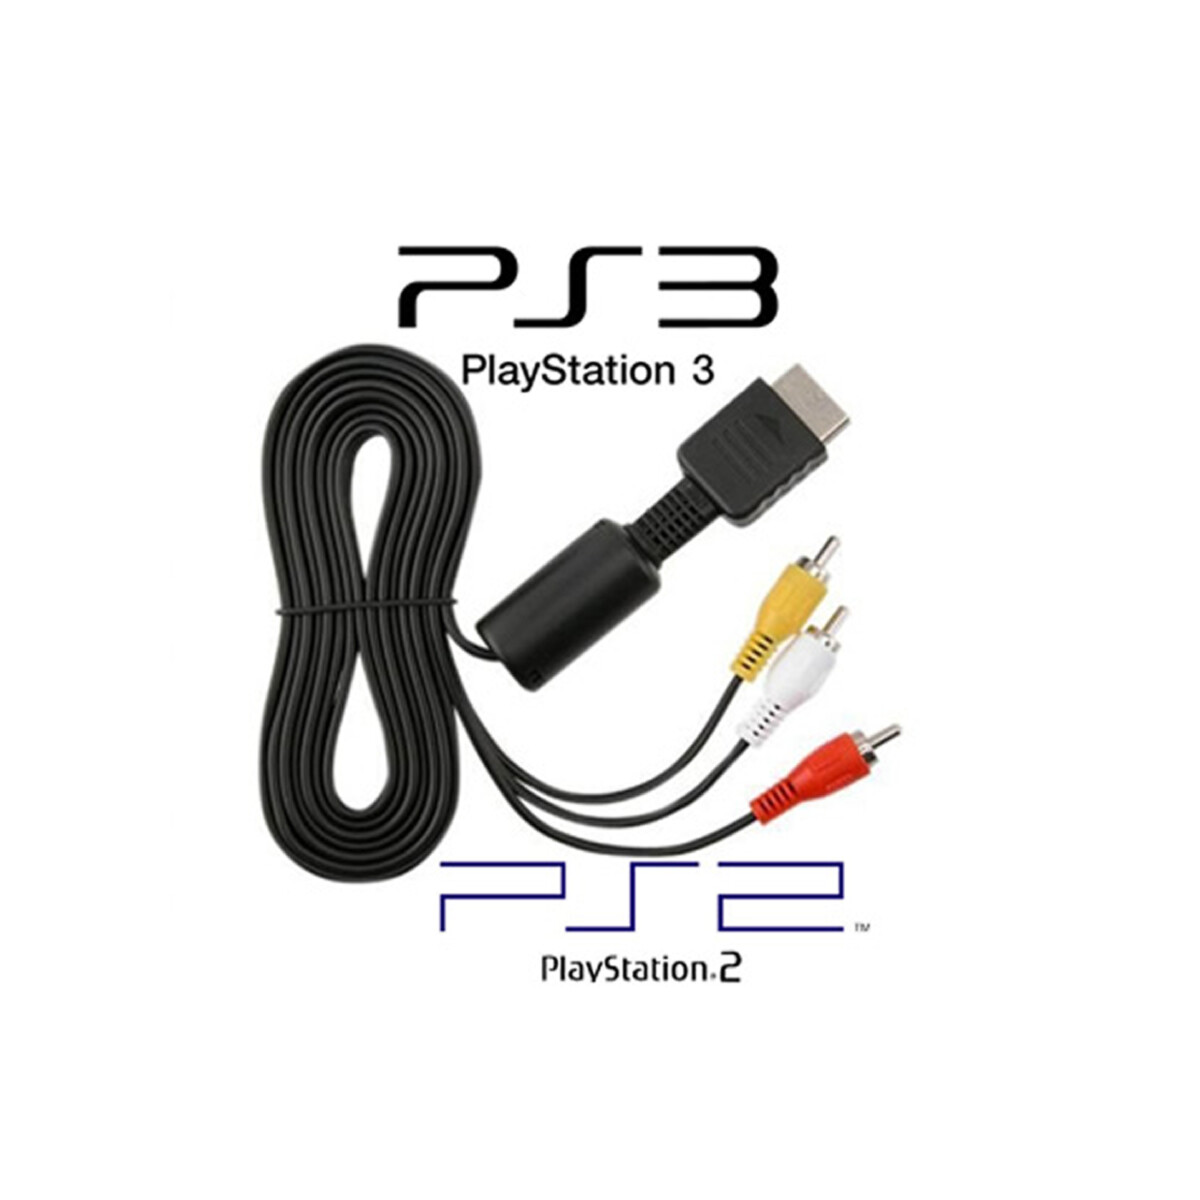 Cable Audio Y Vídeo Playstation 2 Playstation 3 AV 